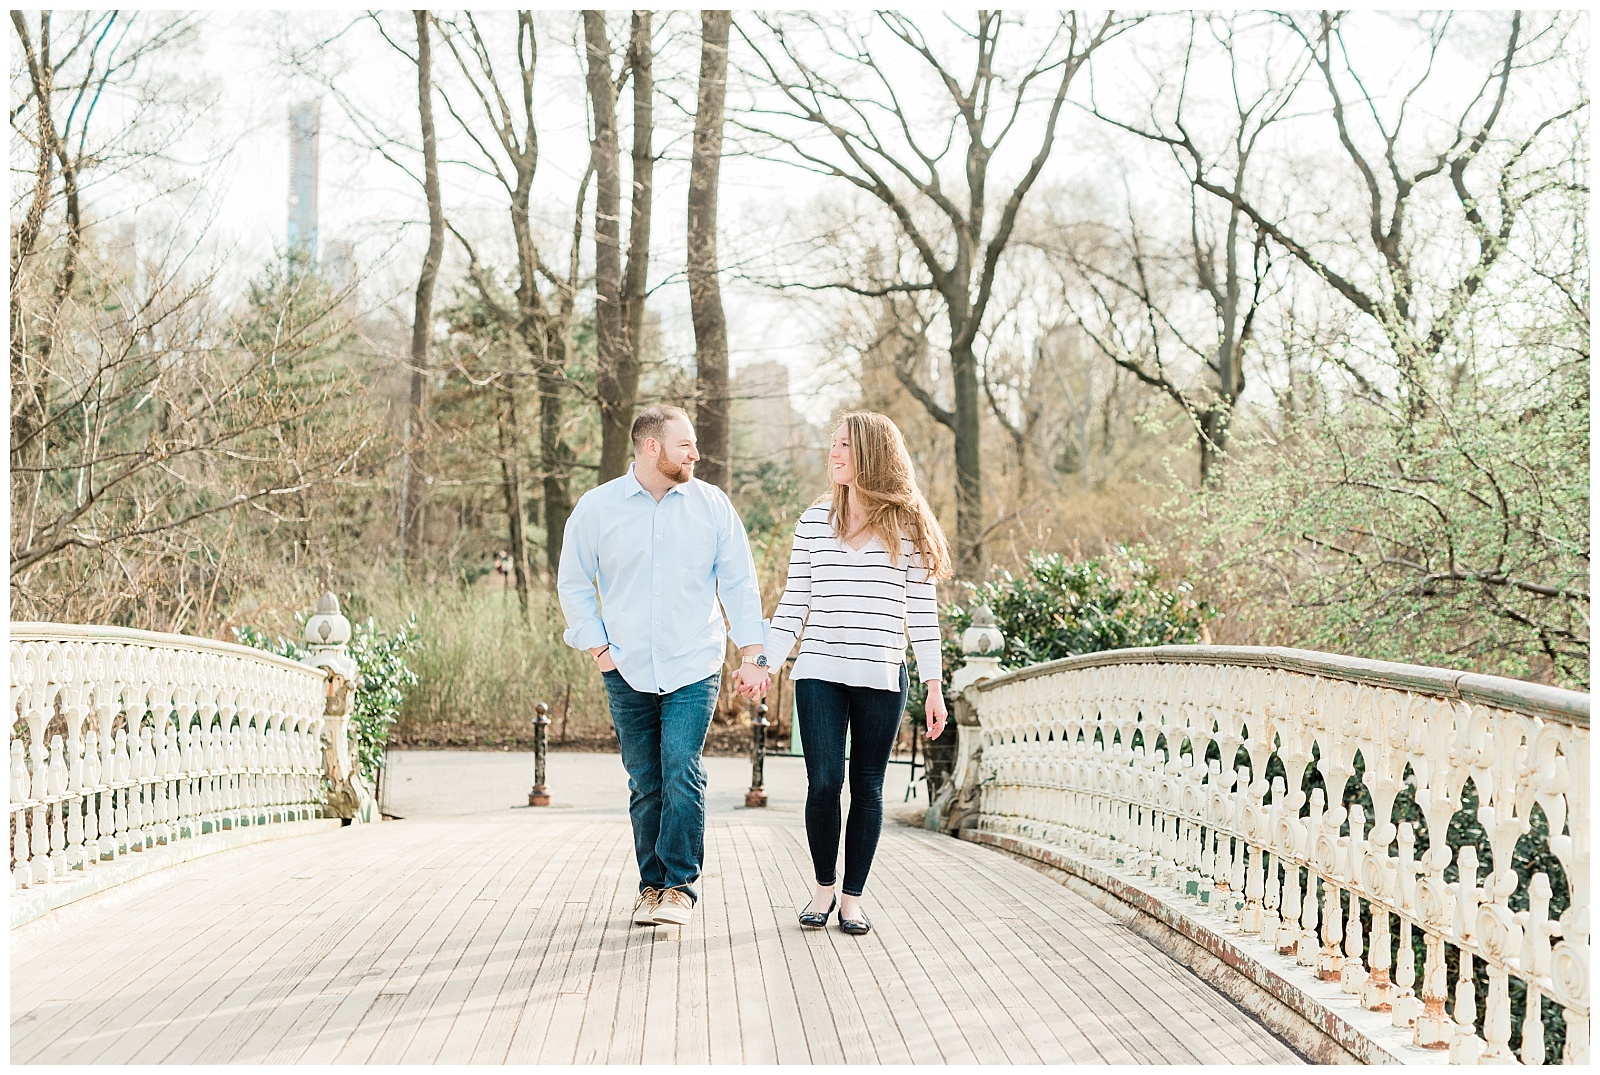 Central Park, NYC engagement session, springtime, wedding photographer, New York, bridge, walking